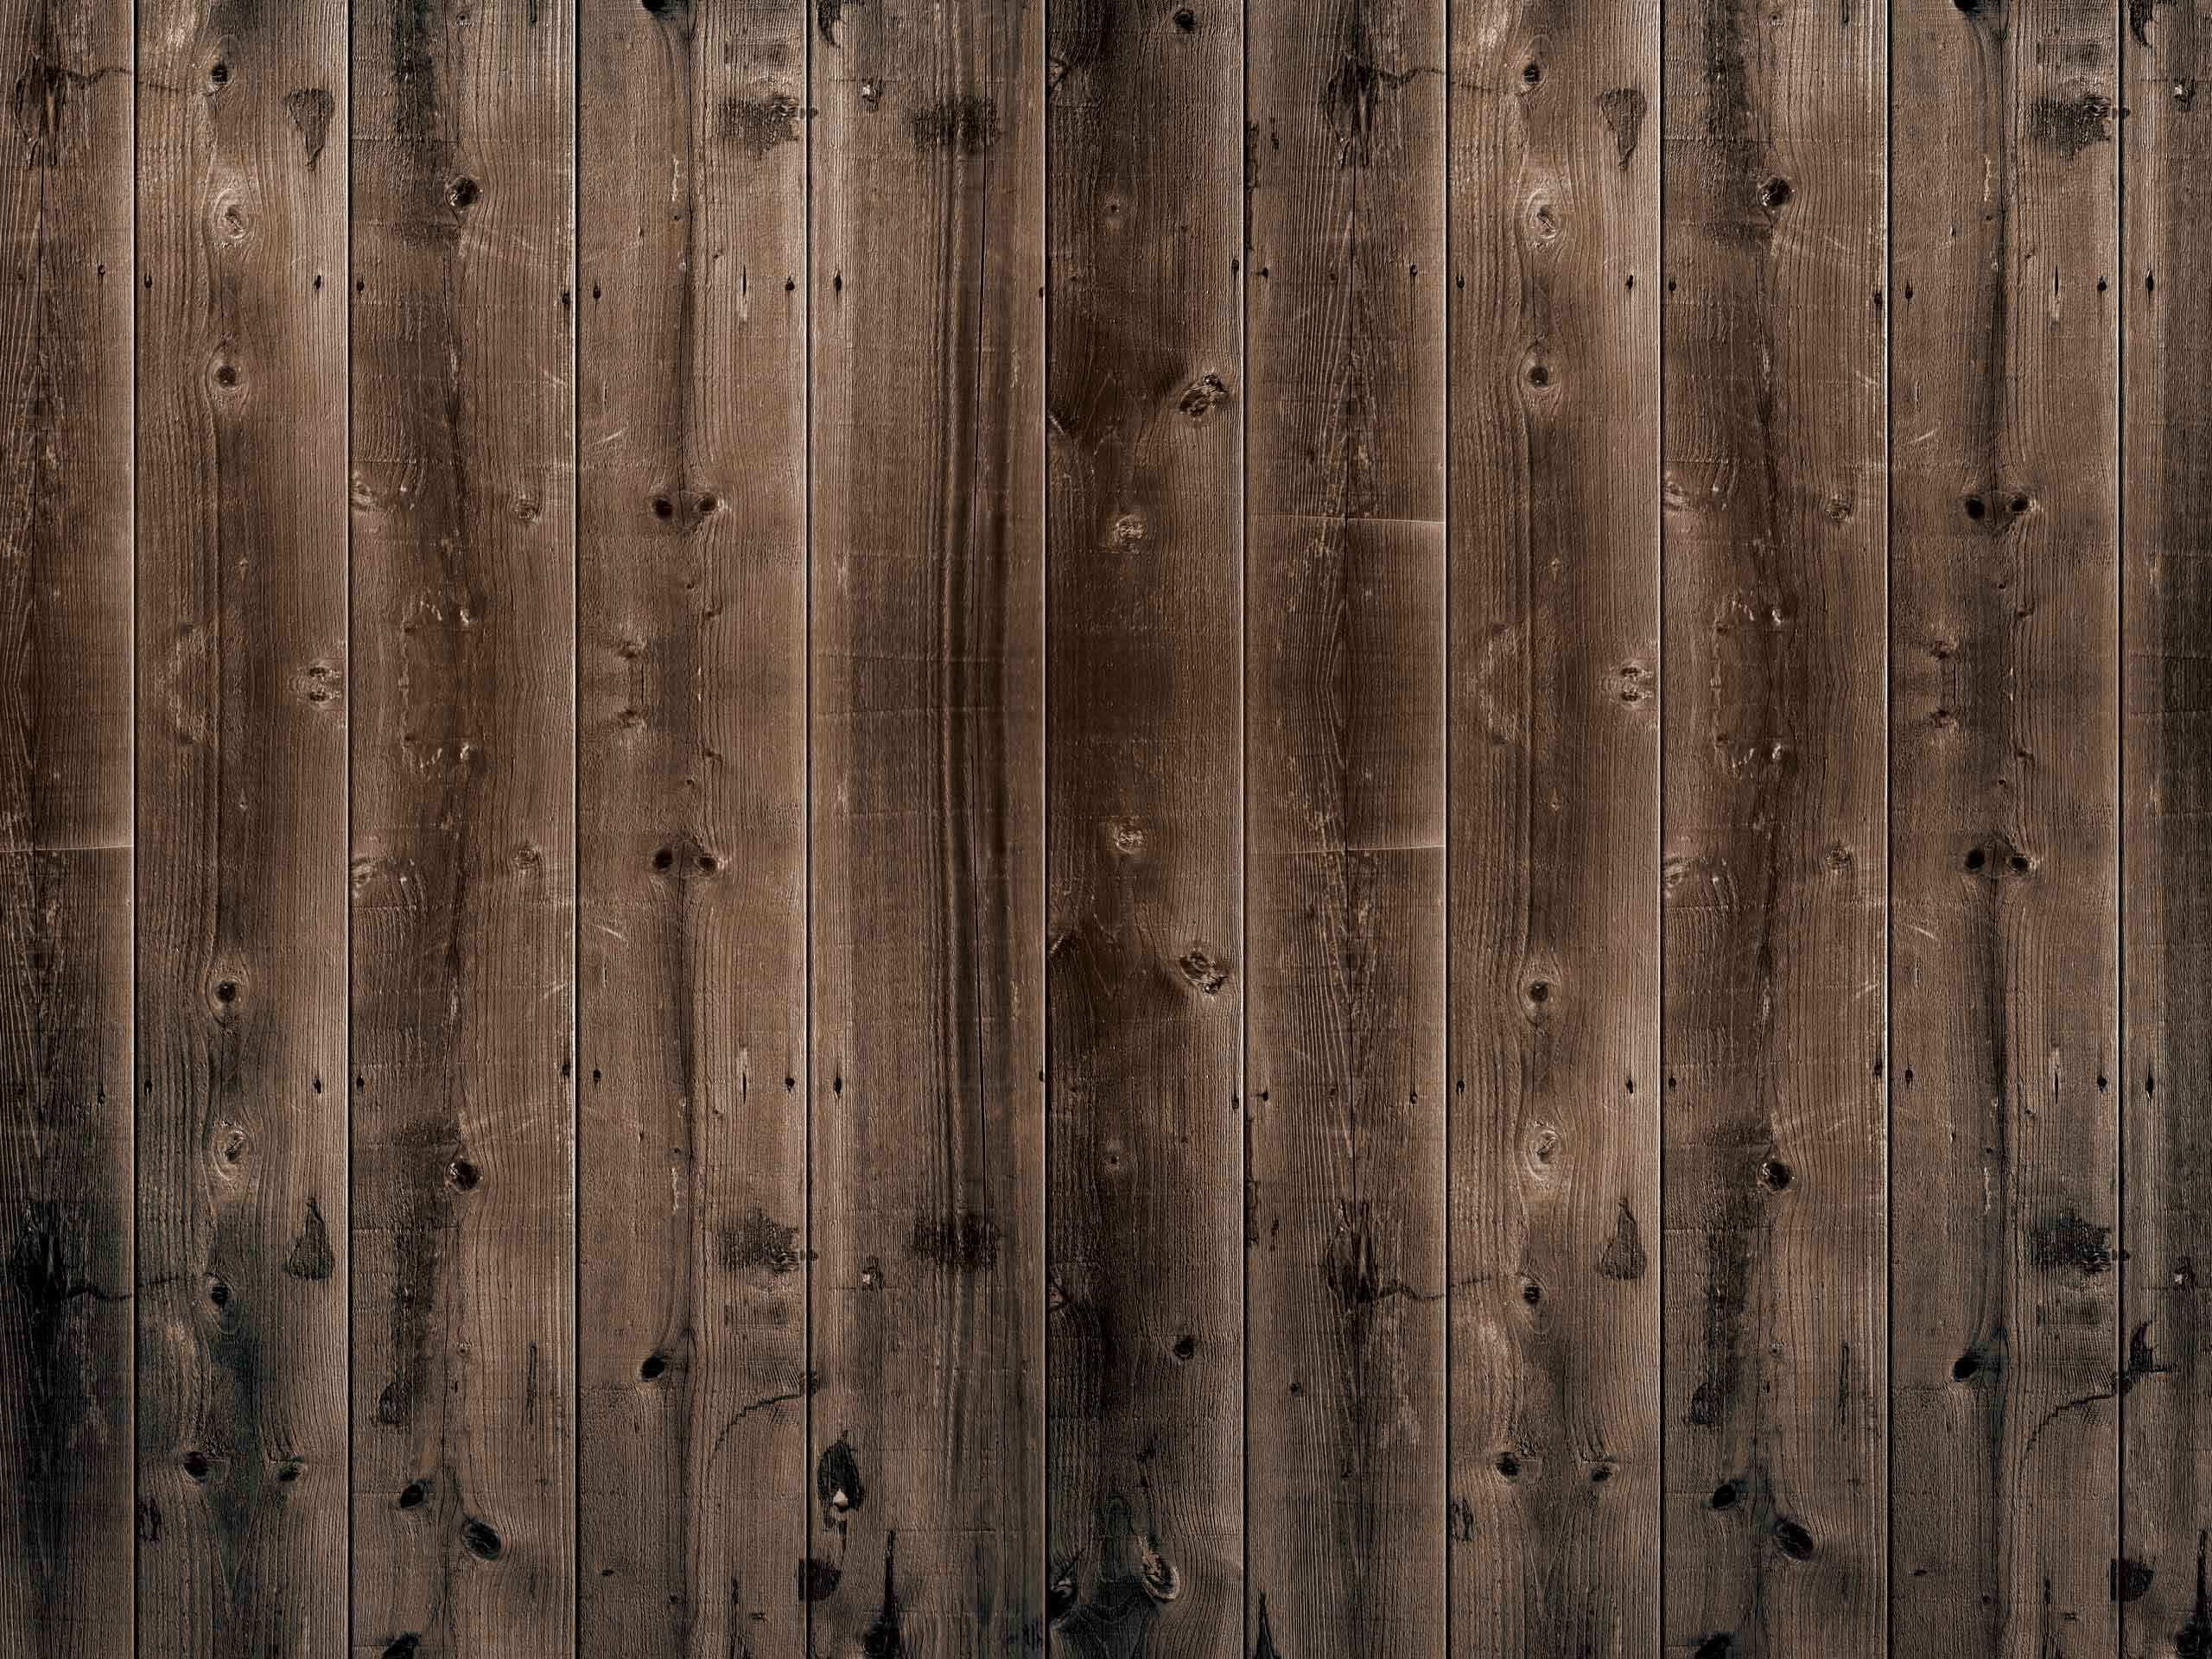 Barn Wood Background Rustic